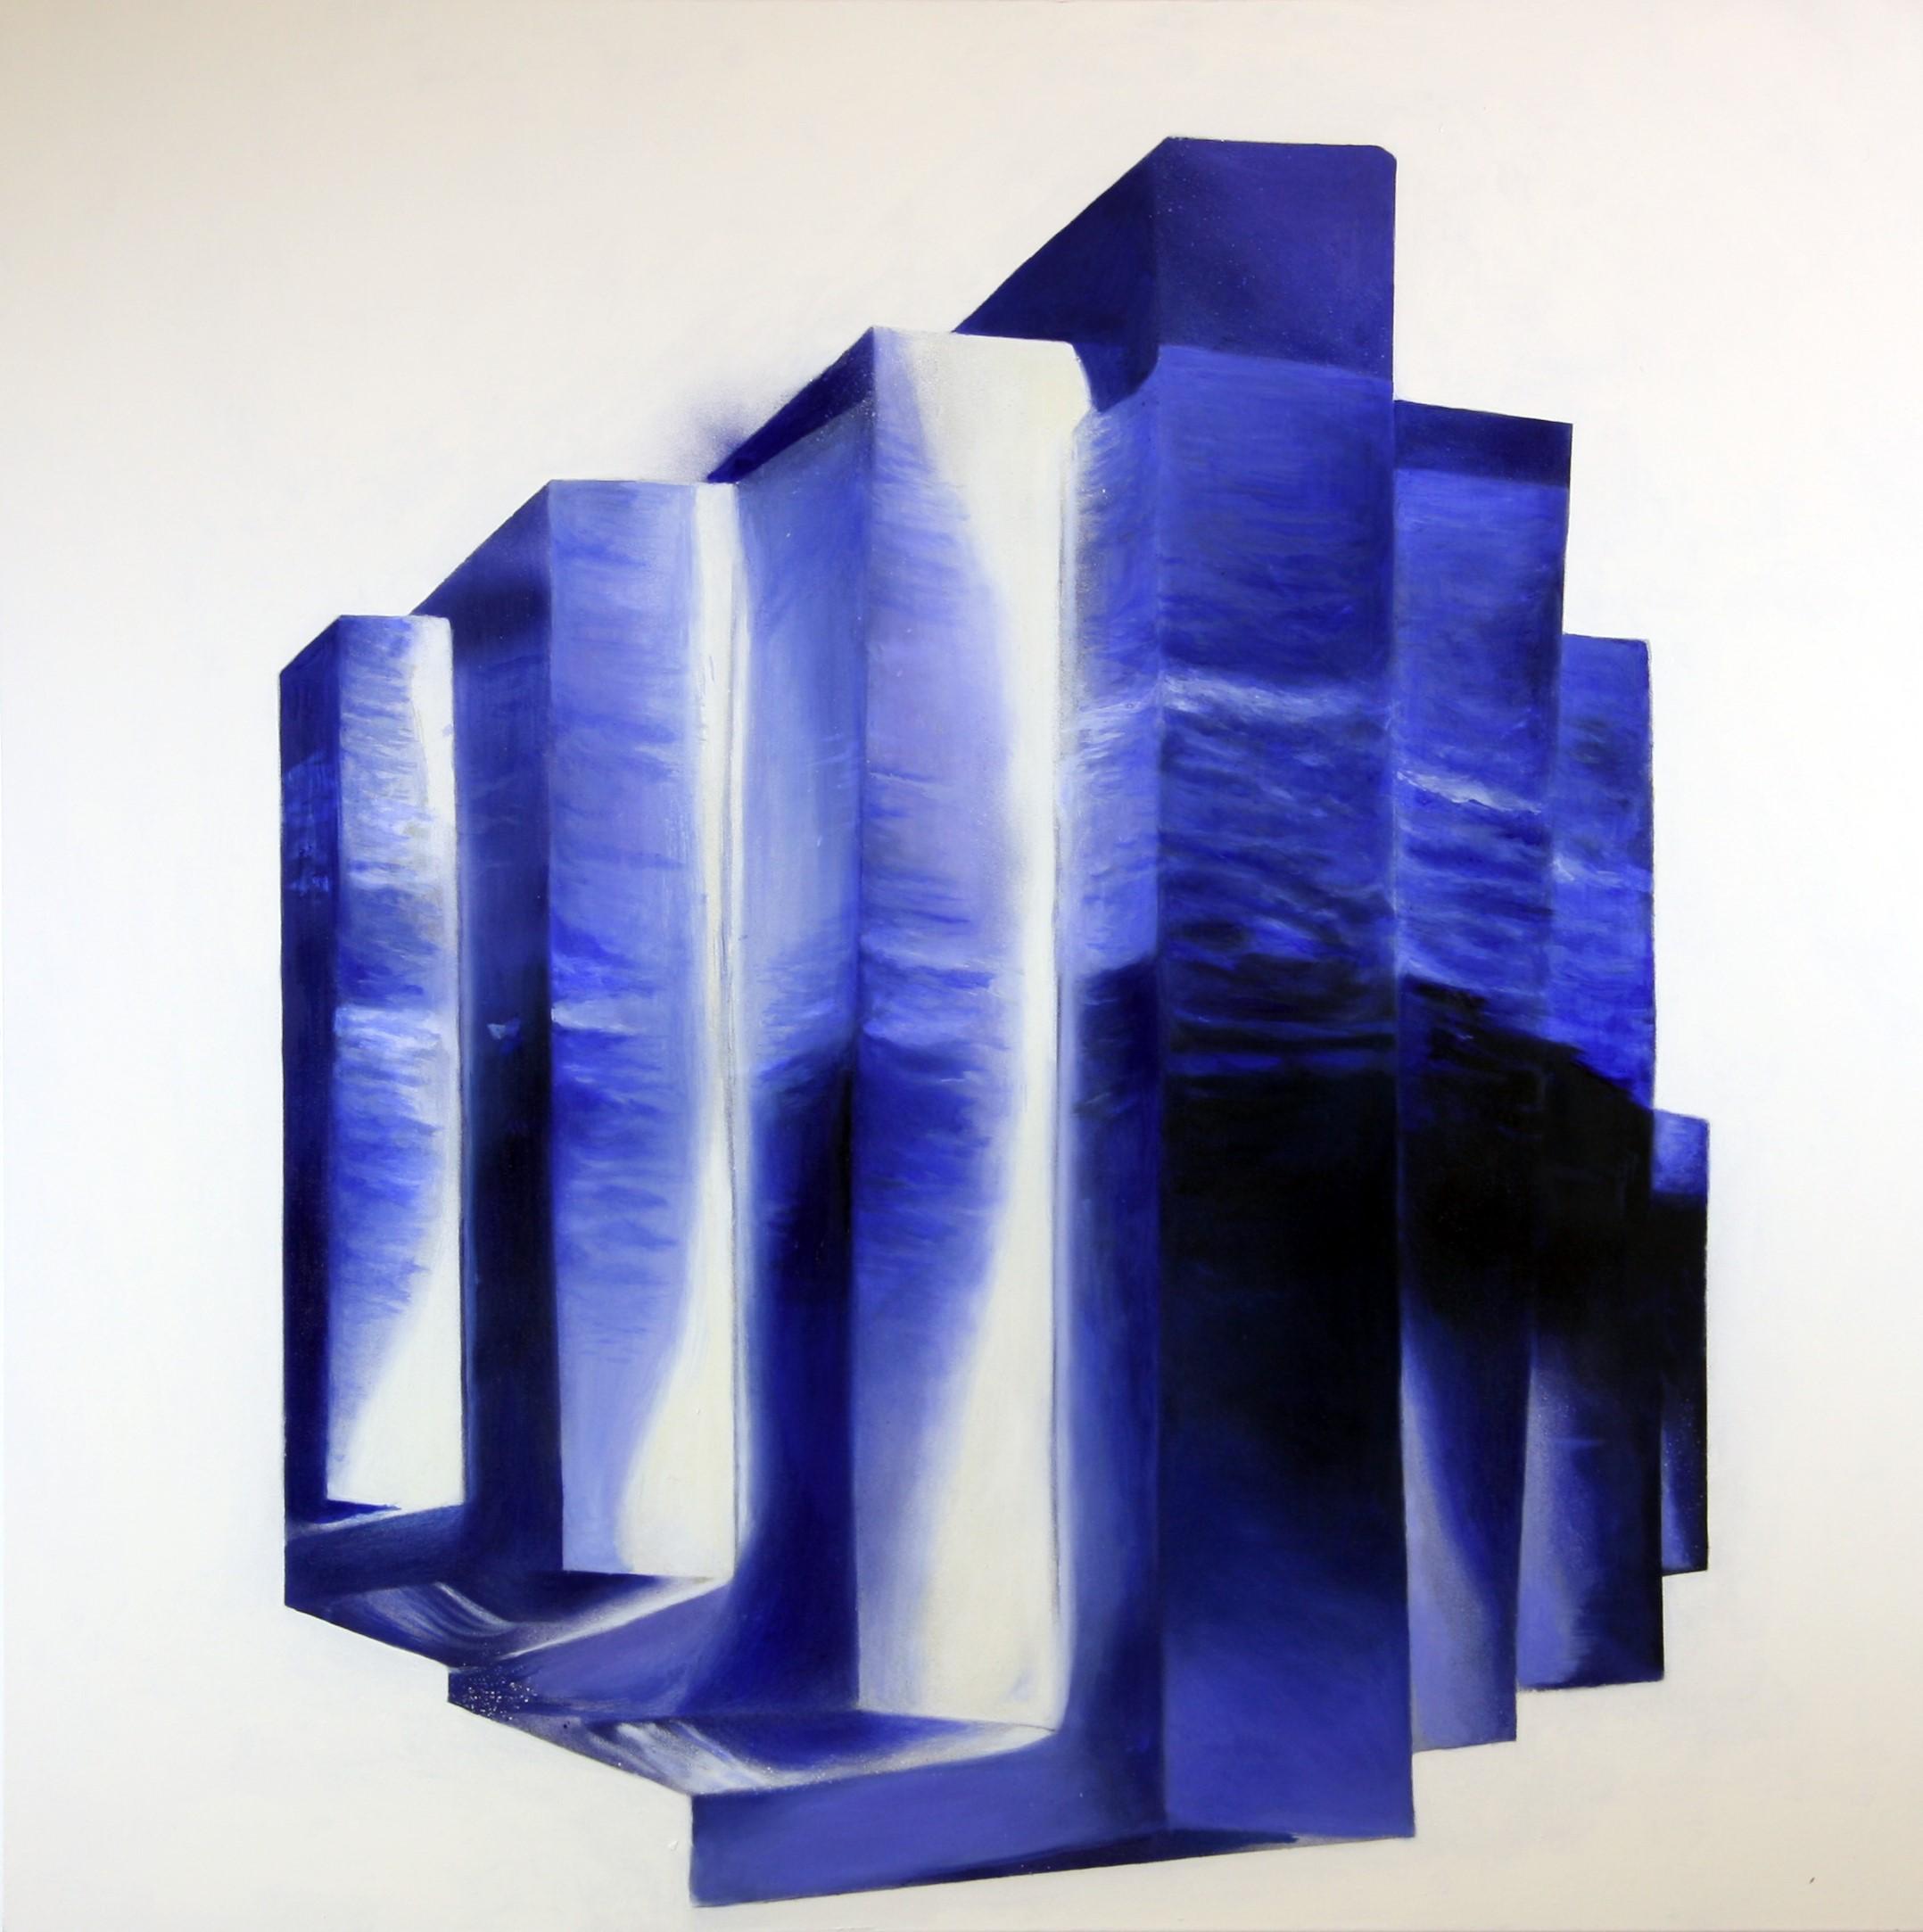 Rania Rangou, 'The sea in words', 2014, oil on canvas, 100x100cm